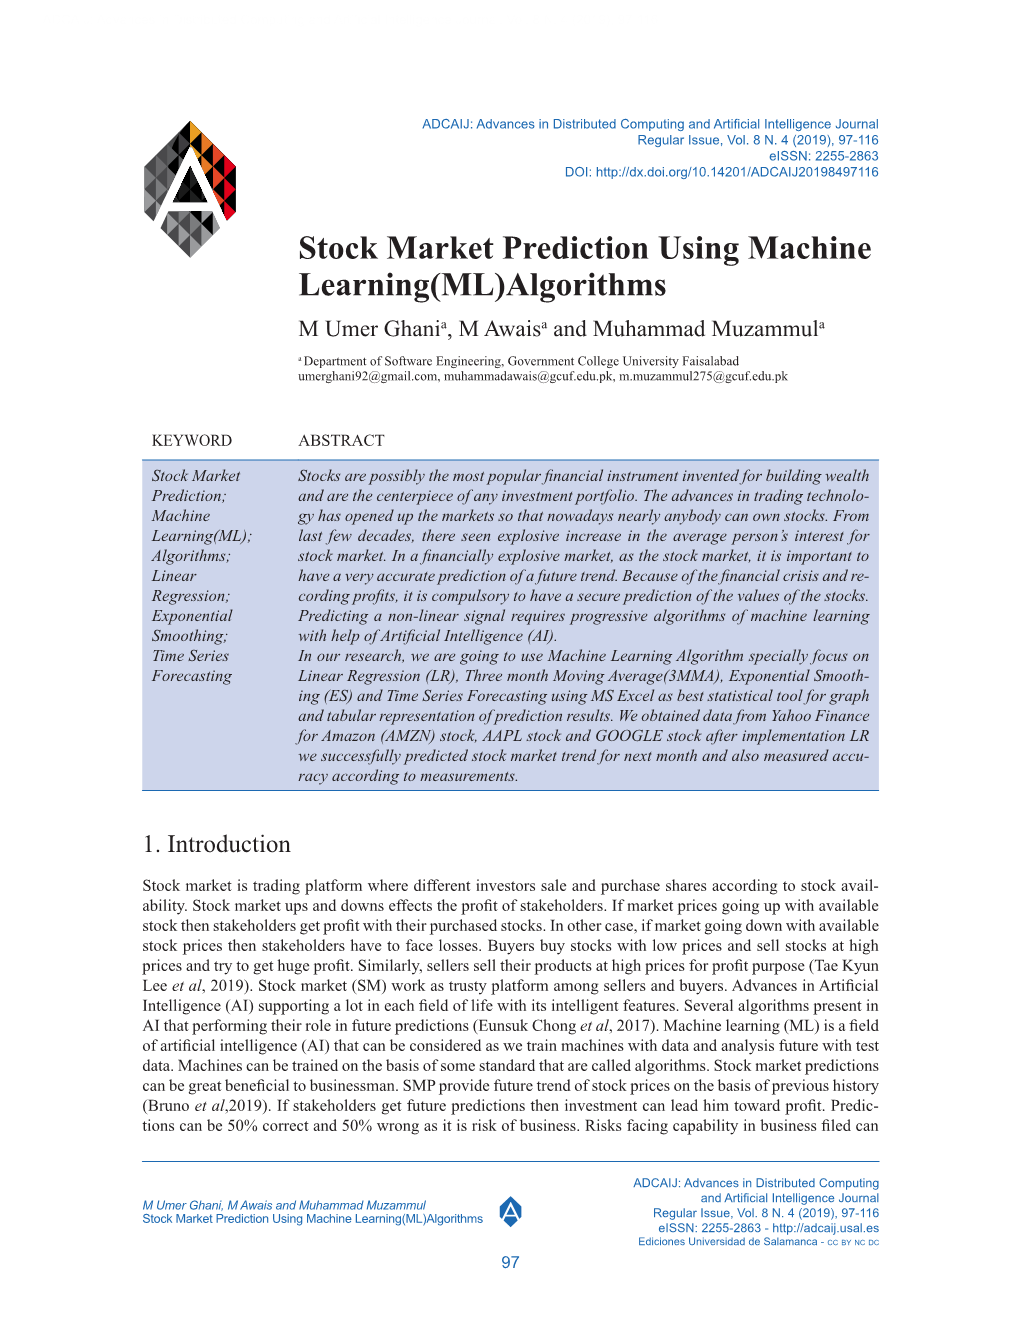 Stock Market Prediction Using Machine Learning(ML)Algorithms